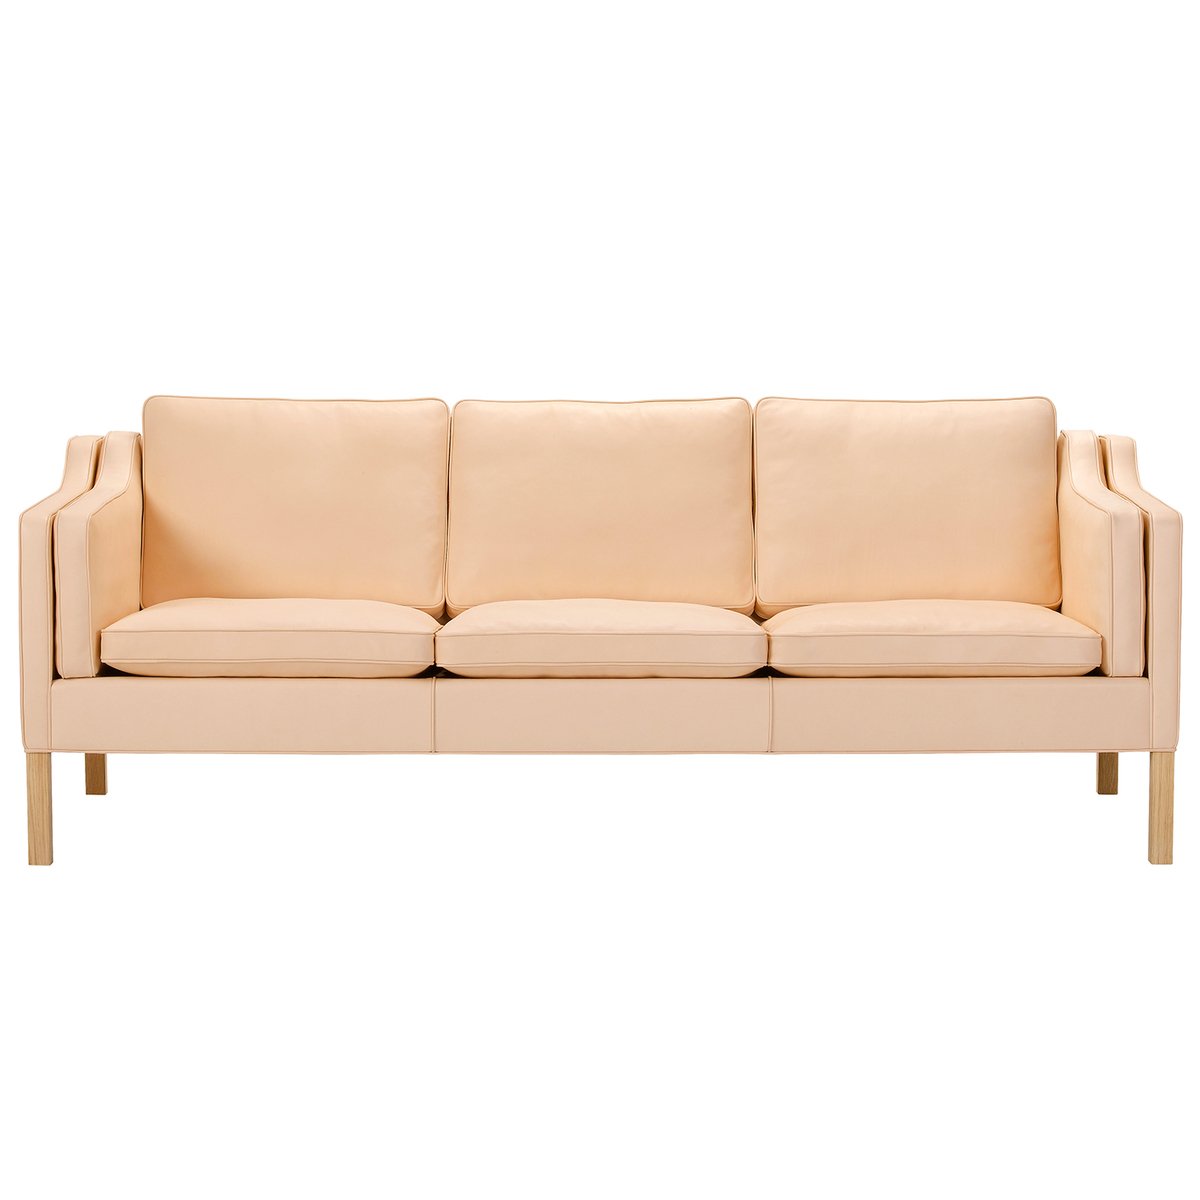 Fredericia Mogensen 2213 Sofa Natural, Leather Furniture St Louis